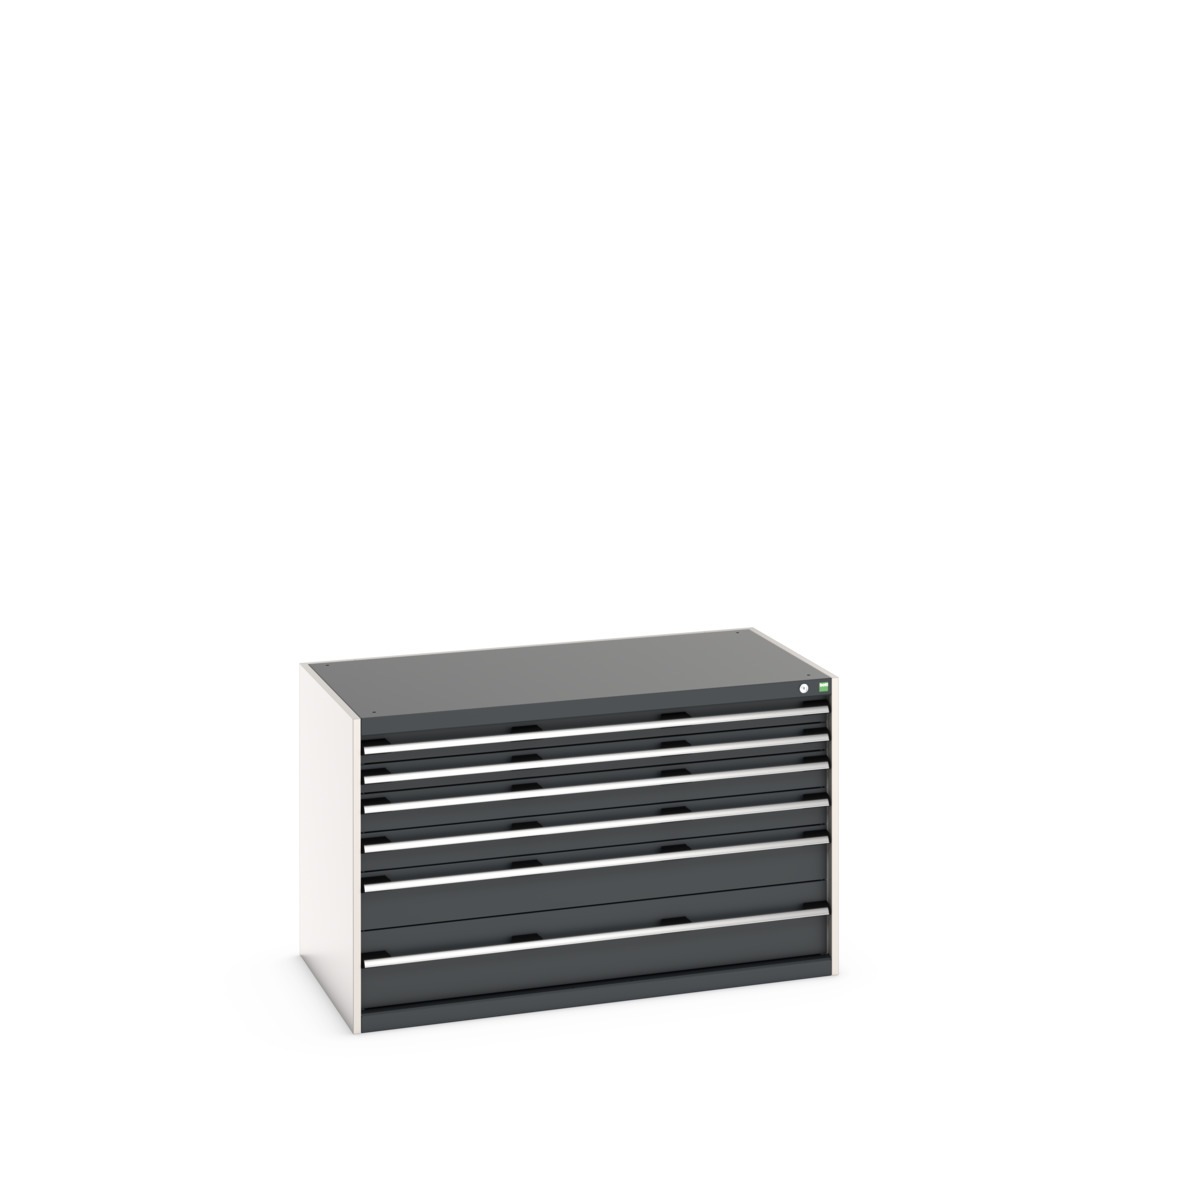 40030071. - cubio drawer cabinet